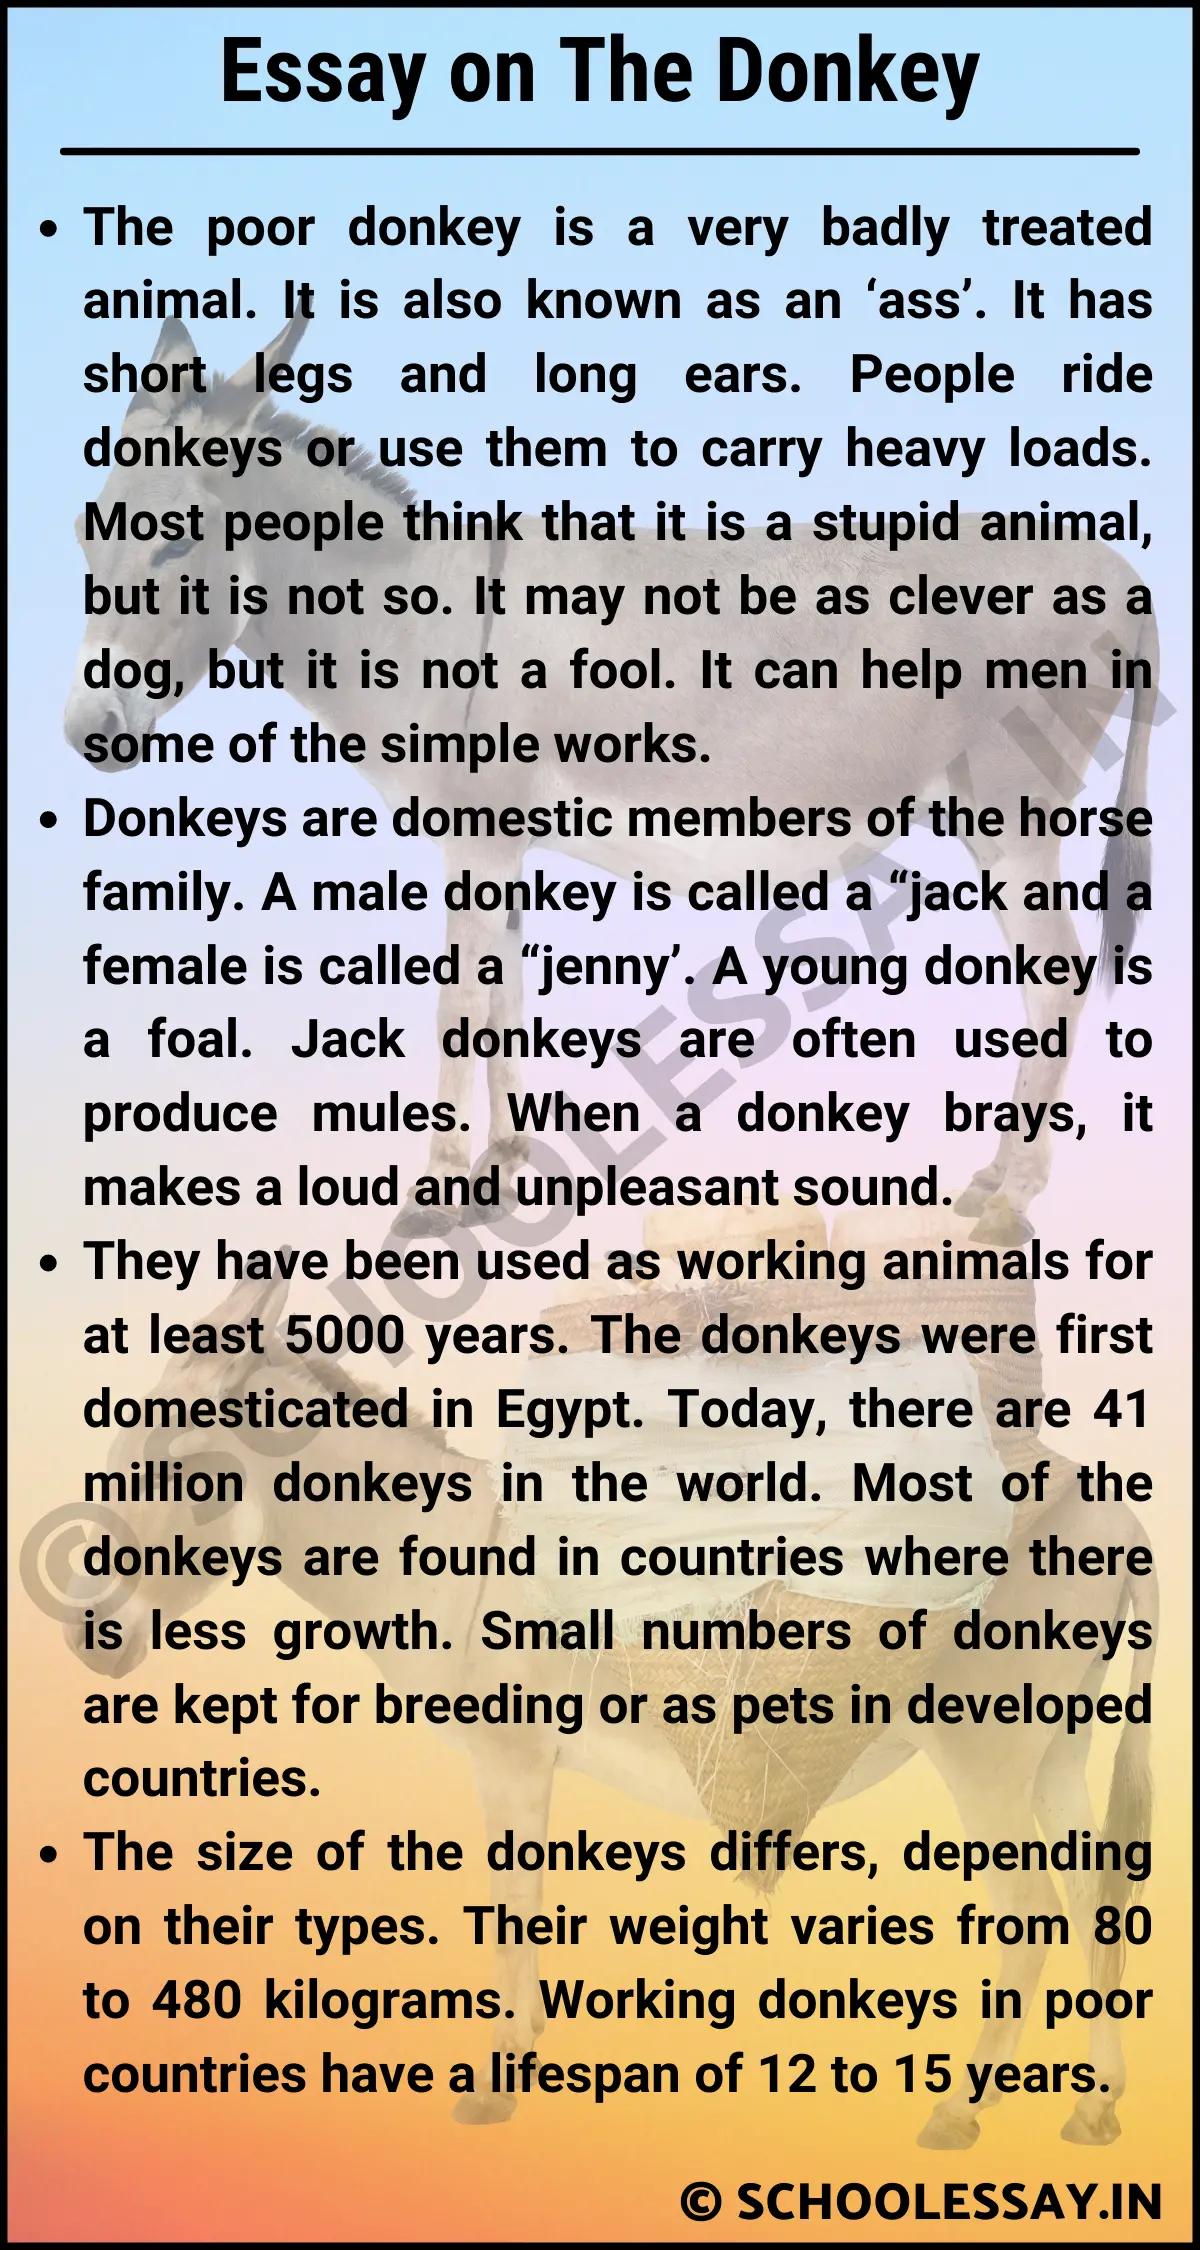 Essay on The Donkey